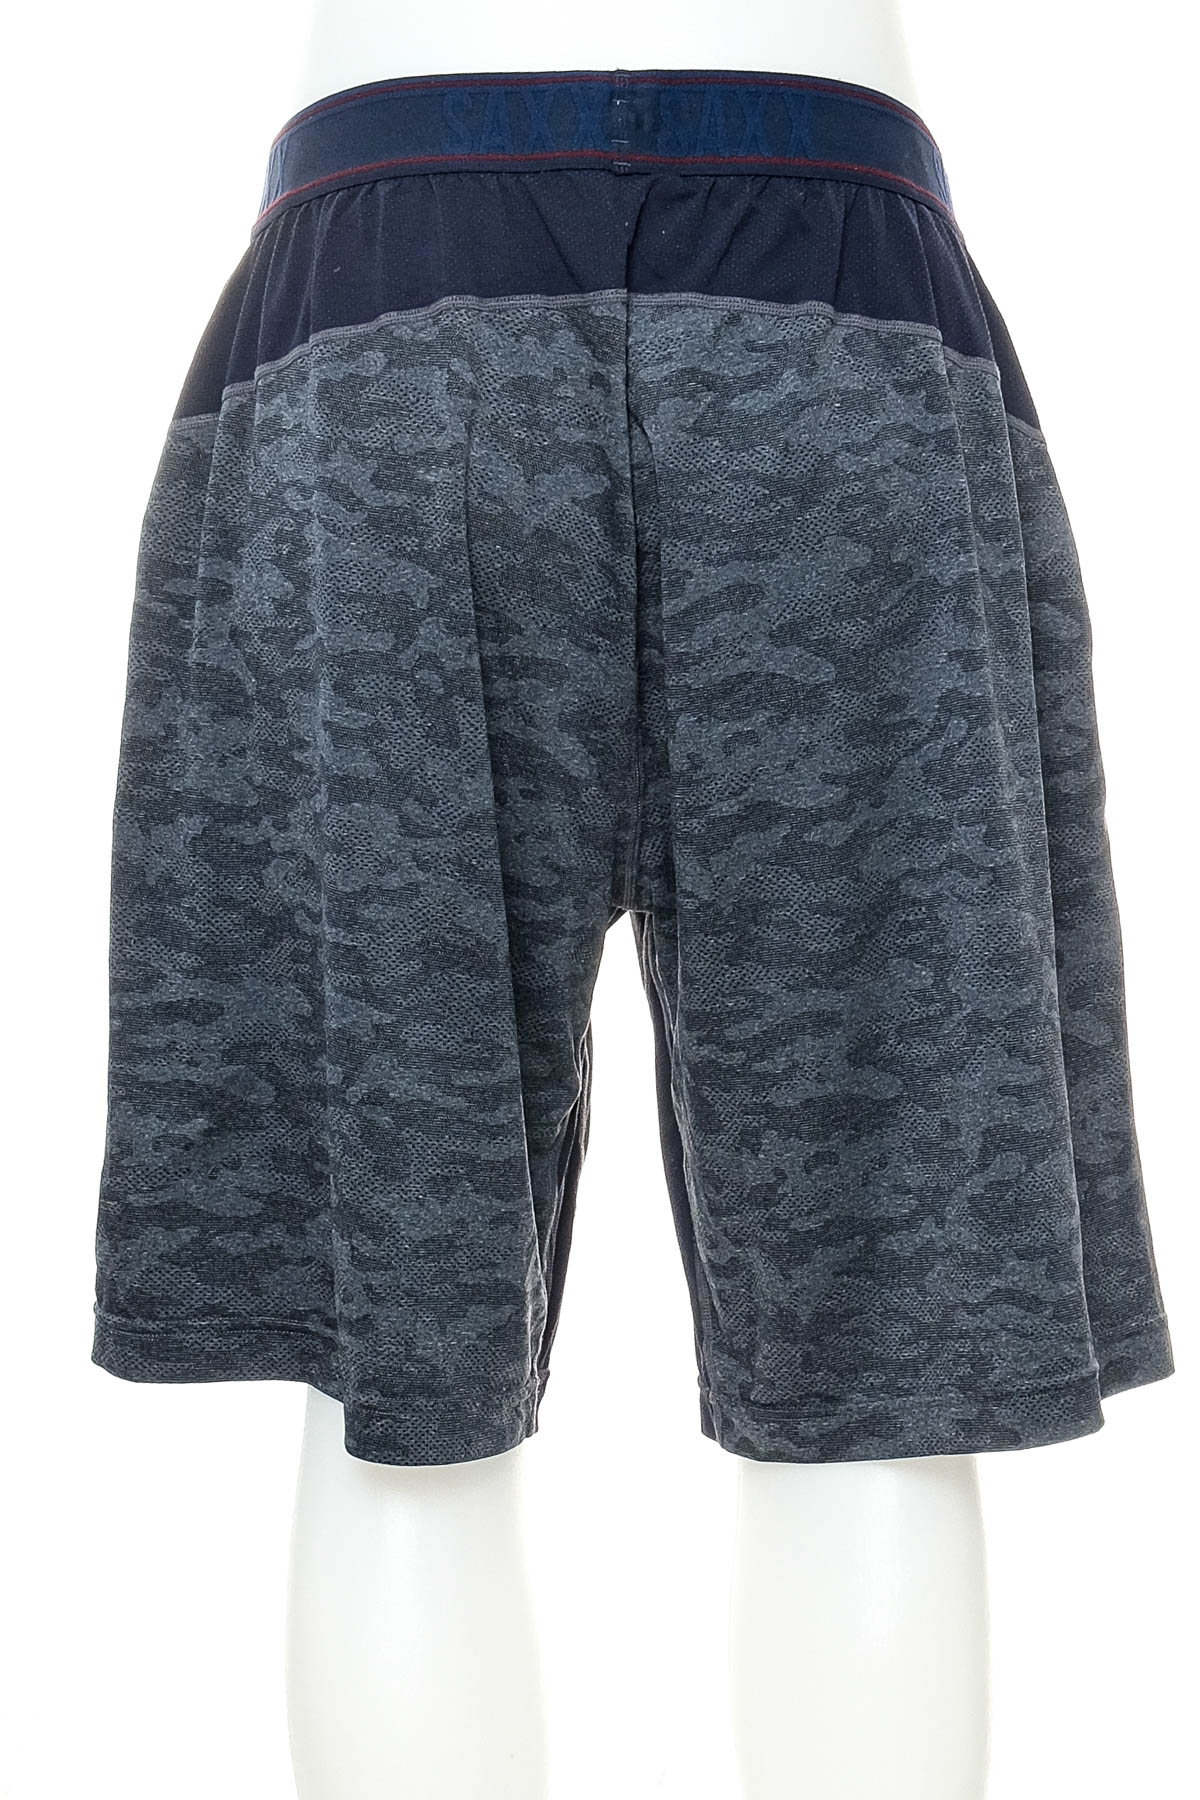 Men's shorts - Saxx - 1